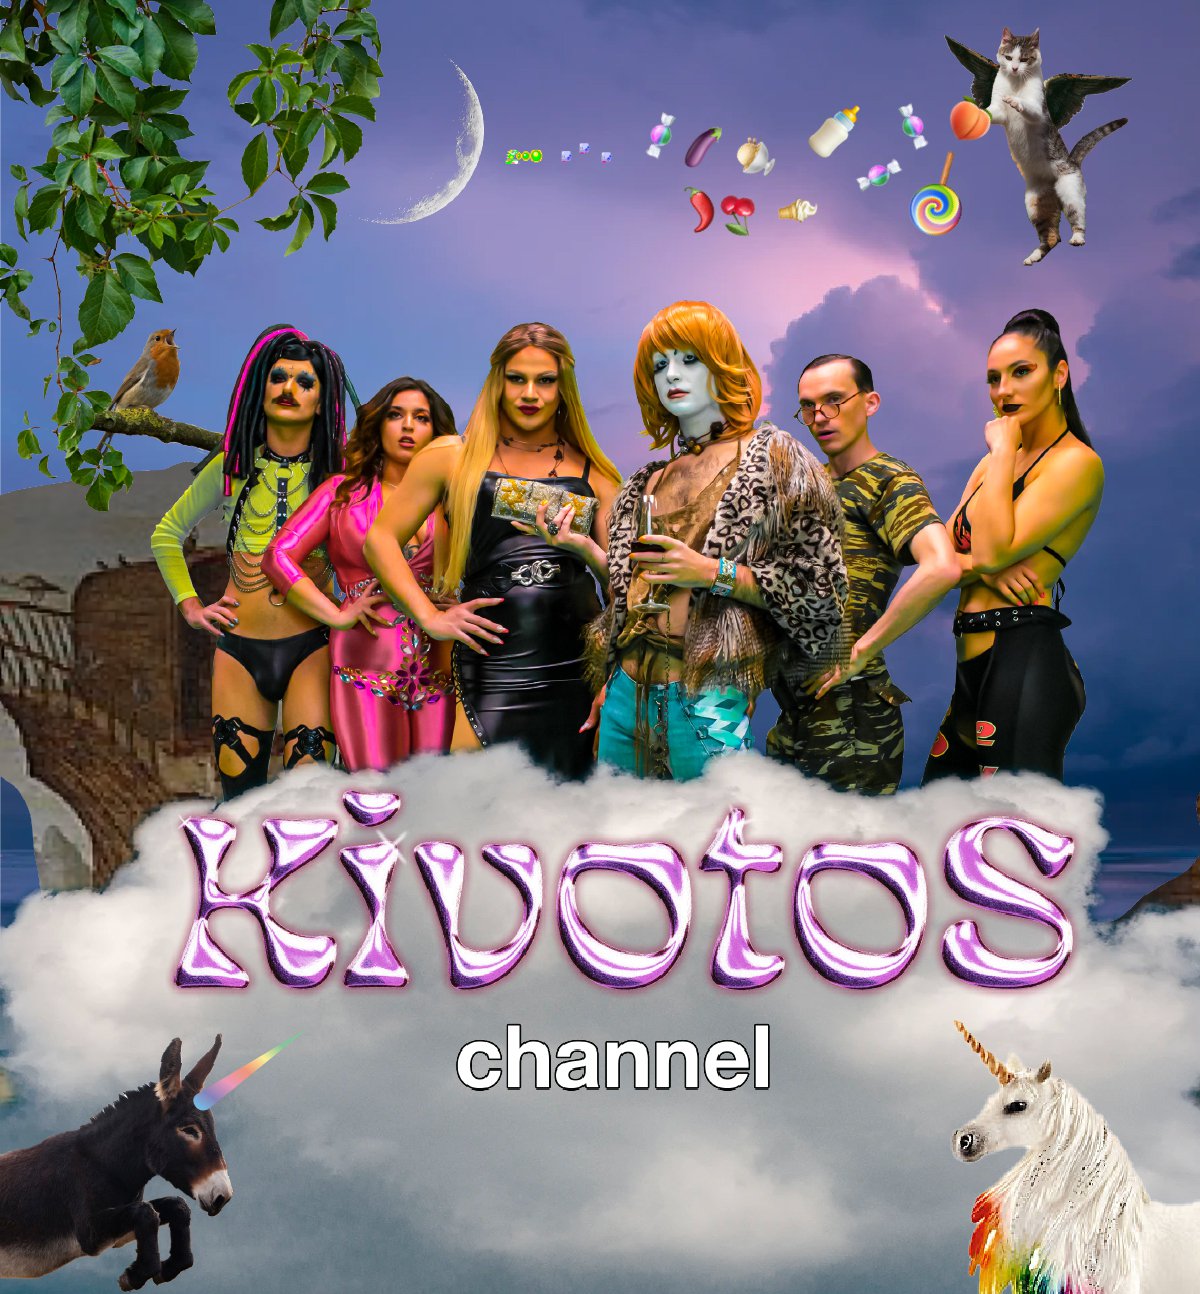 Kivotos Channel